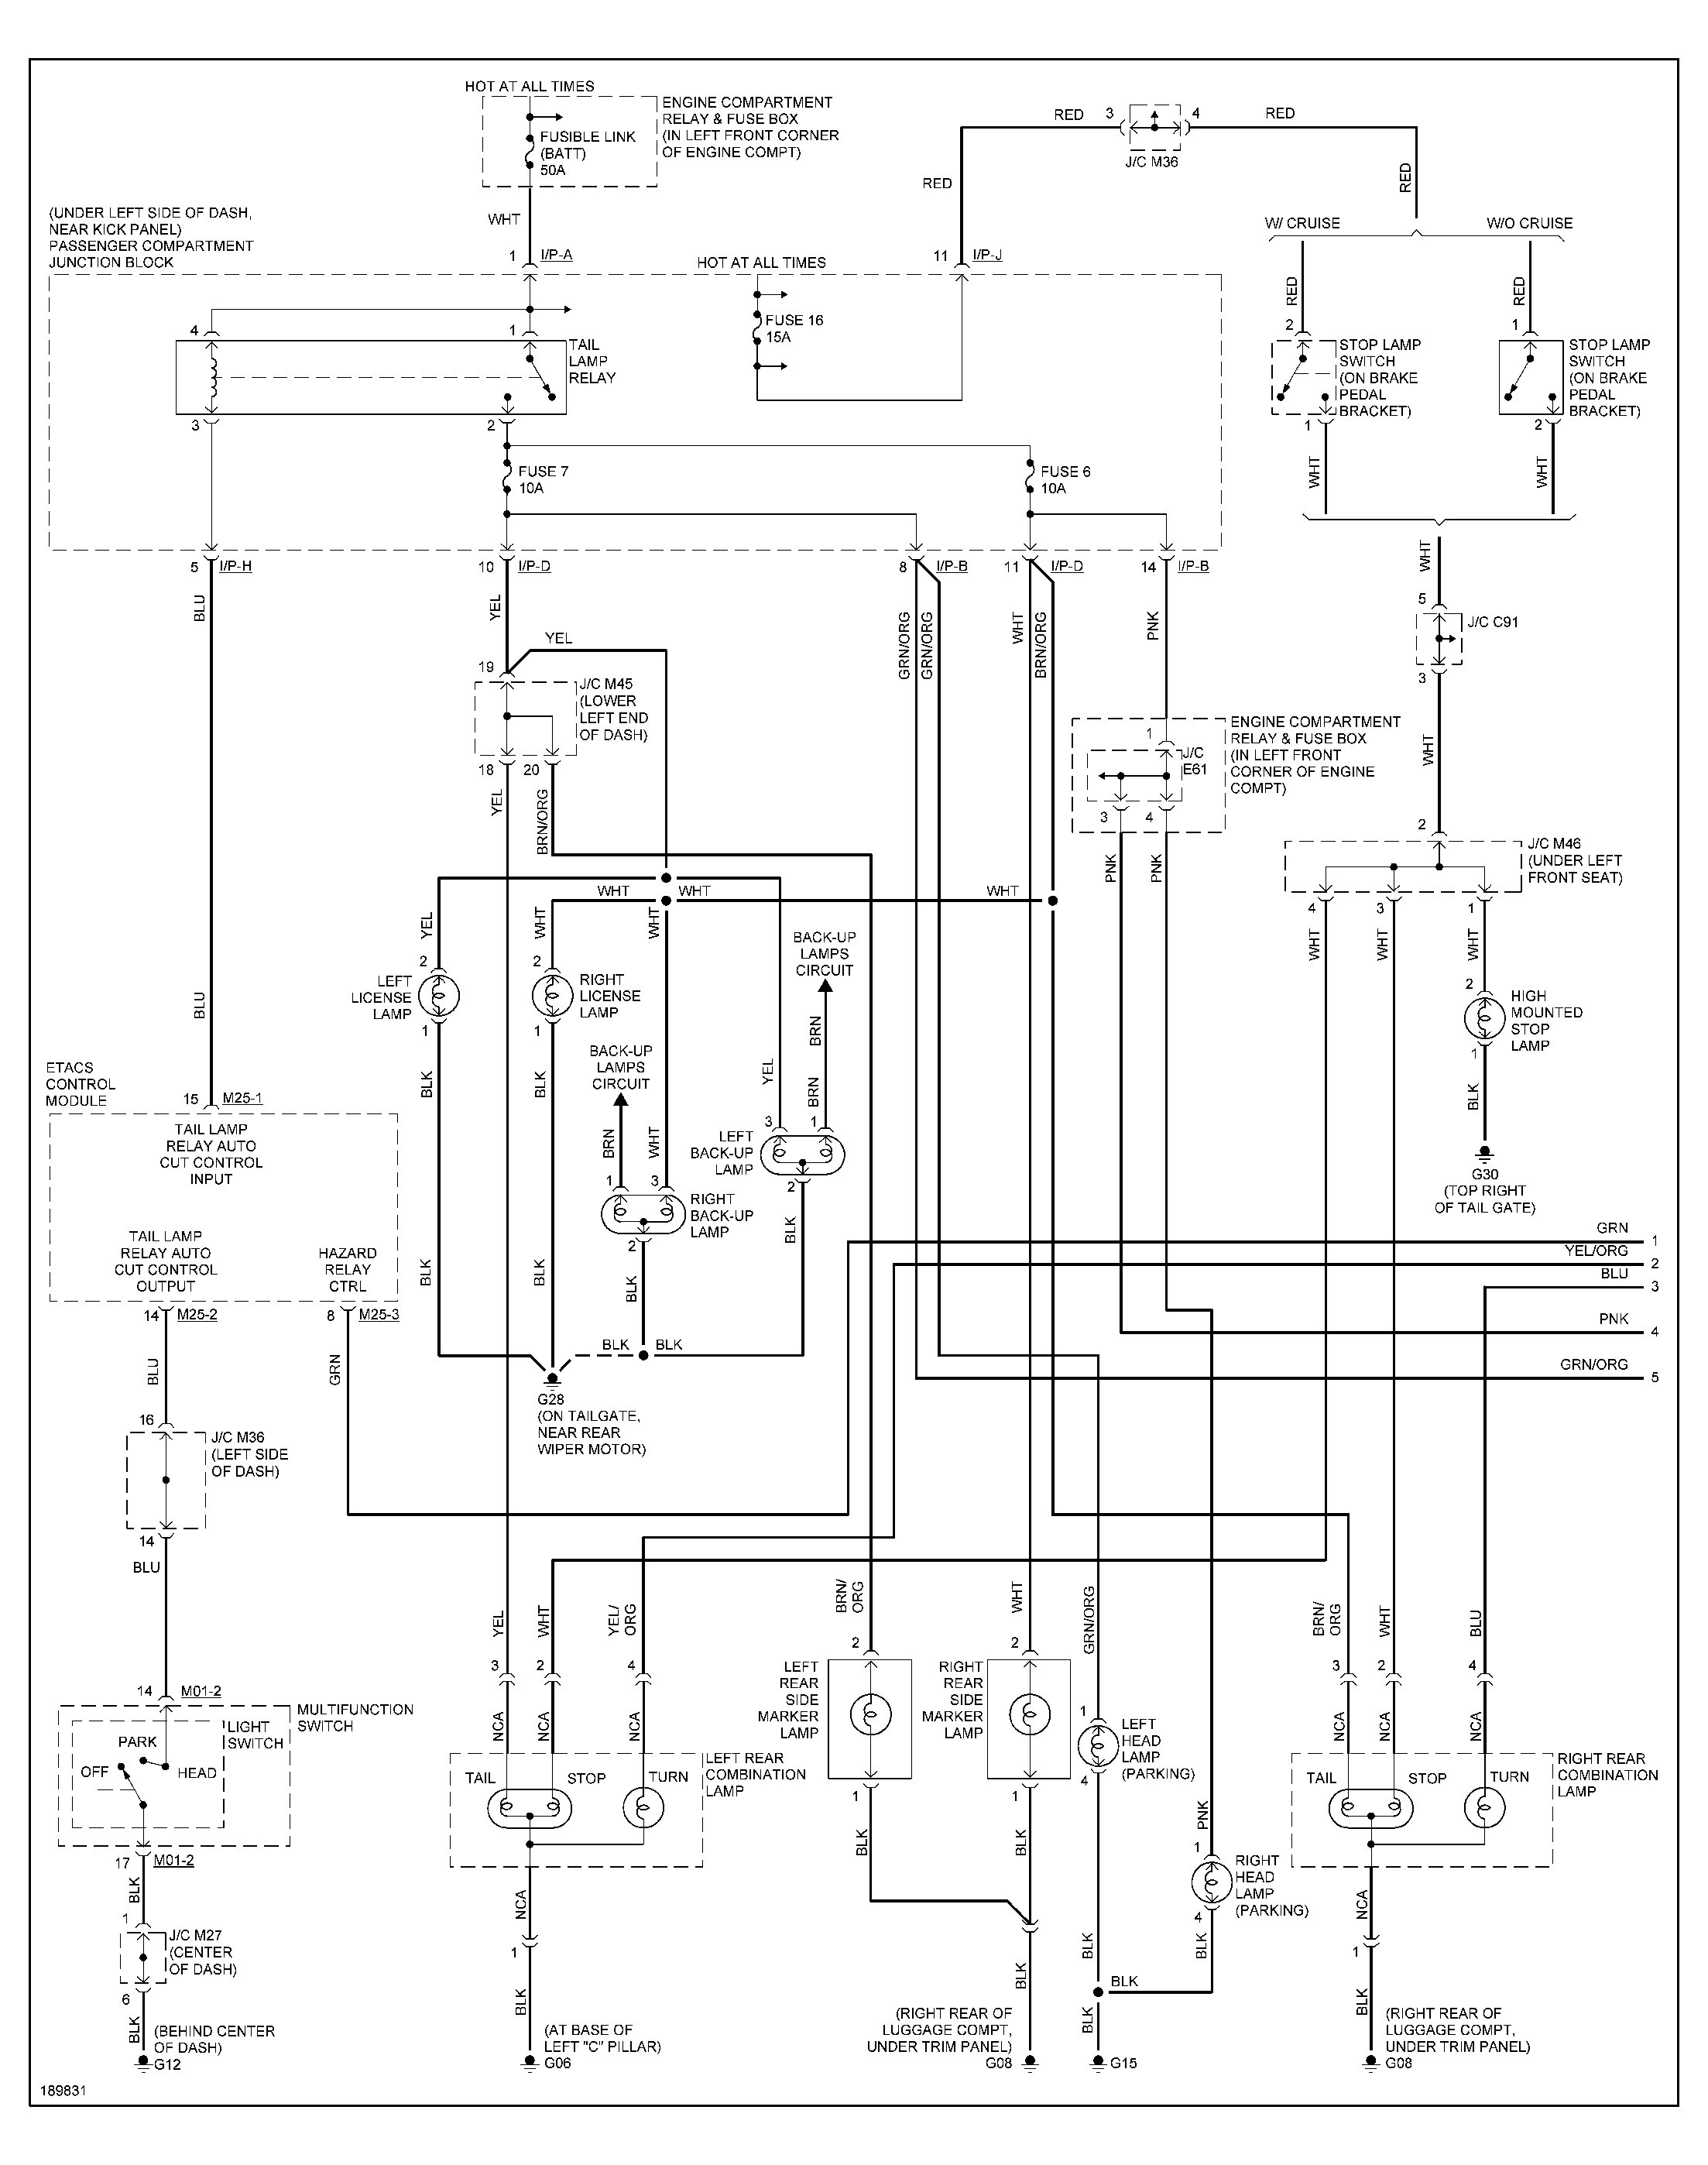 2003 Hyundai Sonata Stereo Wiring Diagram from detoxicrecenze.com